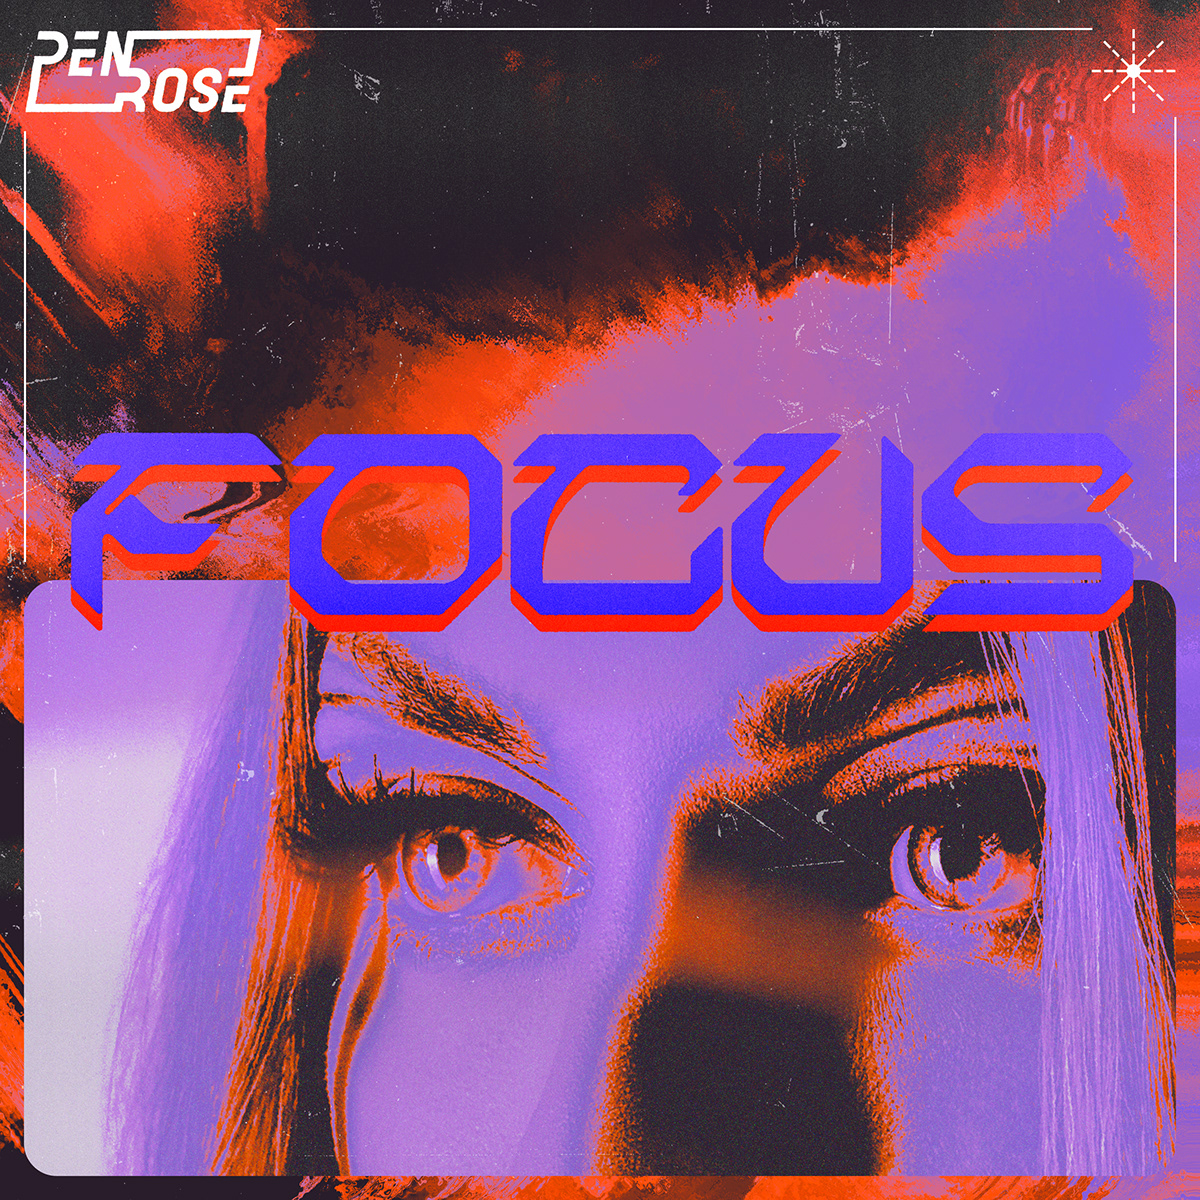 00s aesthetic 90s aesthetic Cover Art Dance music Focus graphic design  music design penrose pop music Texture Design